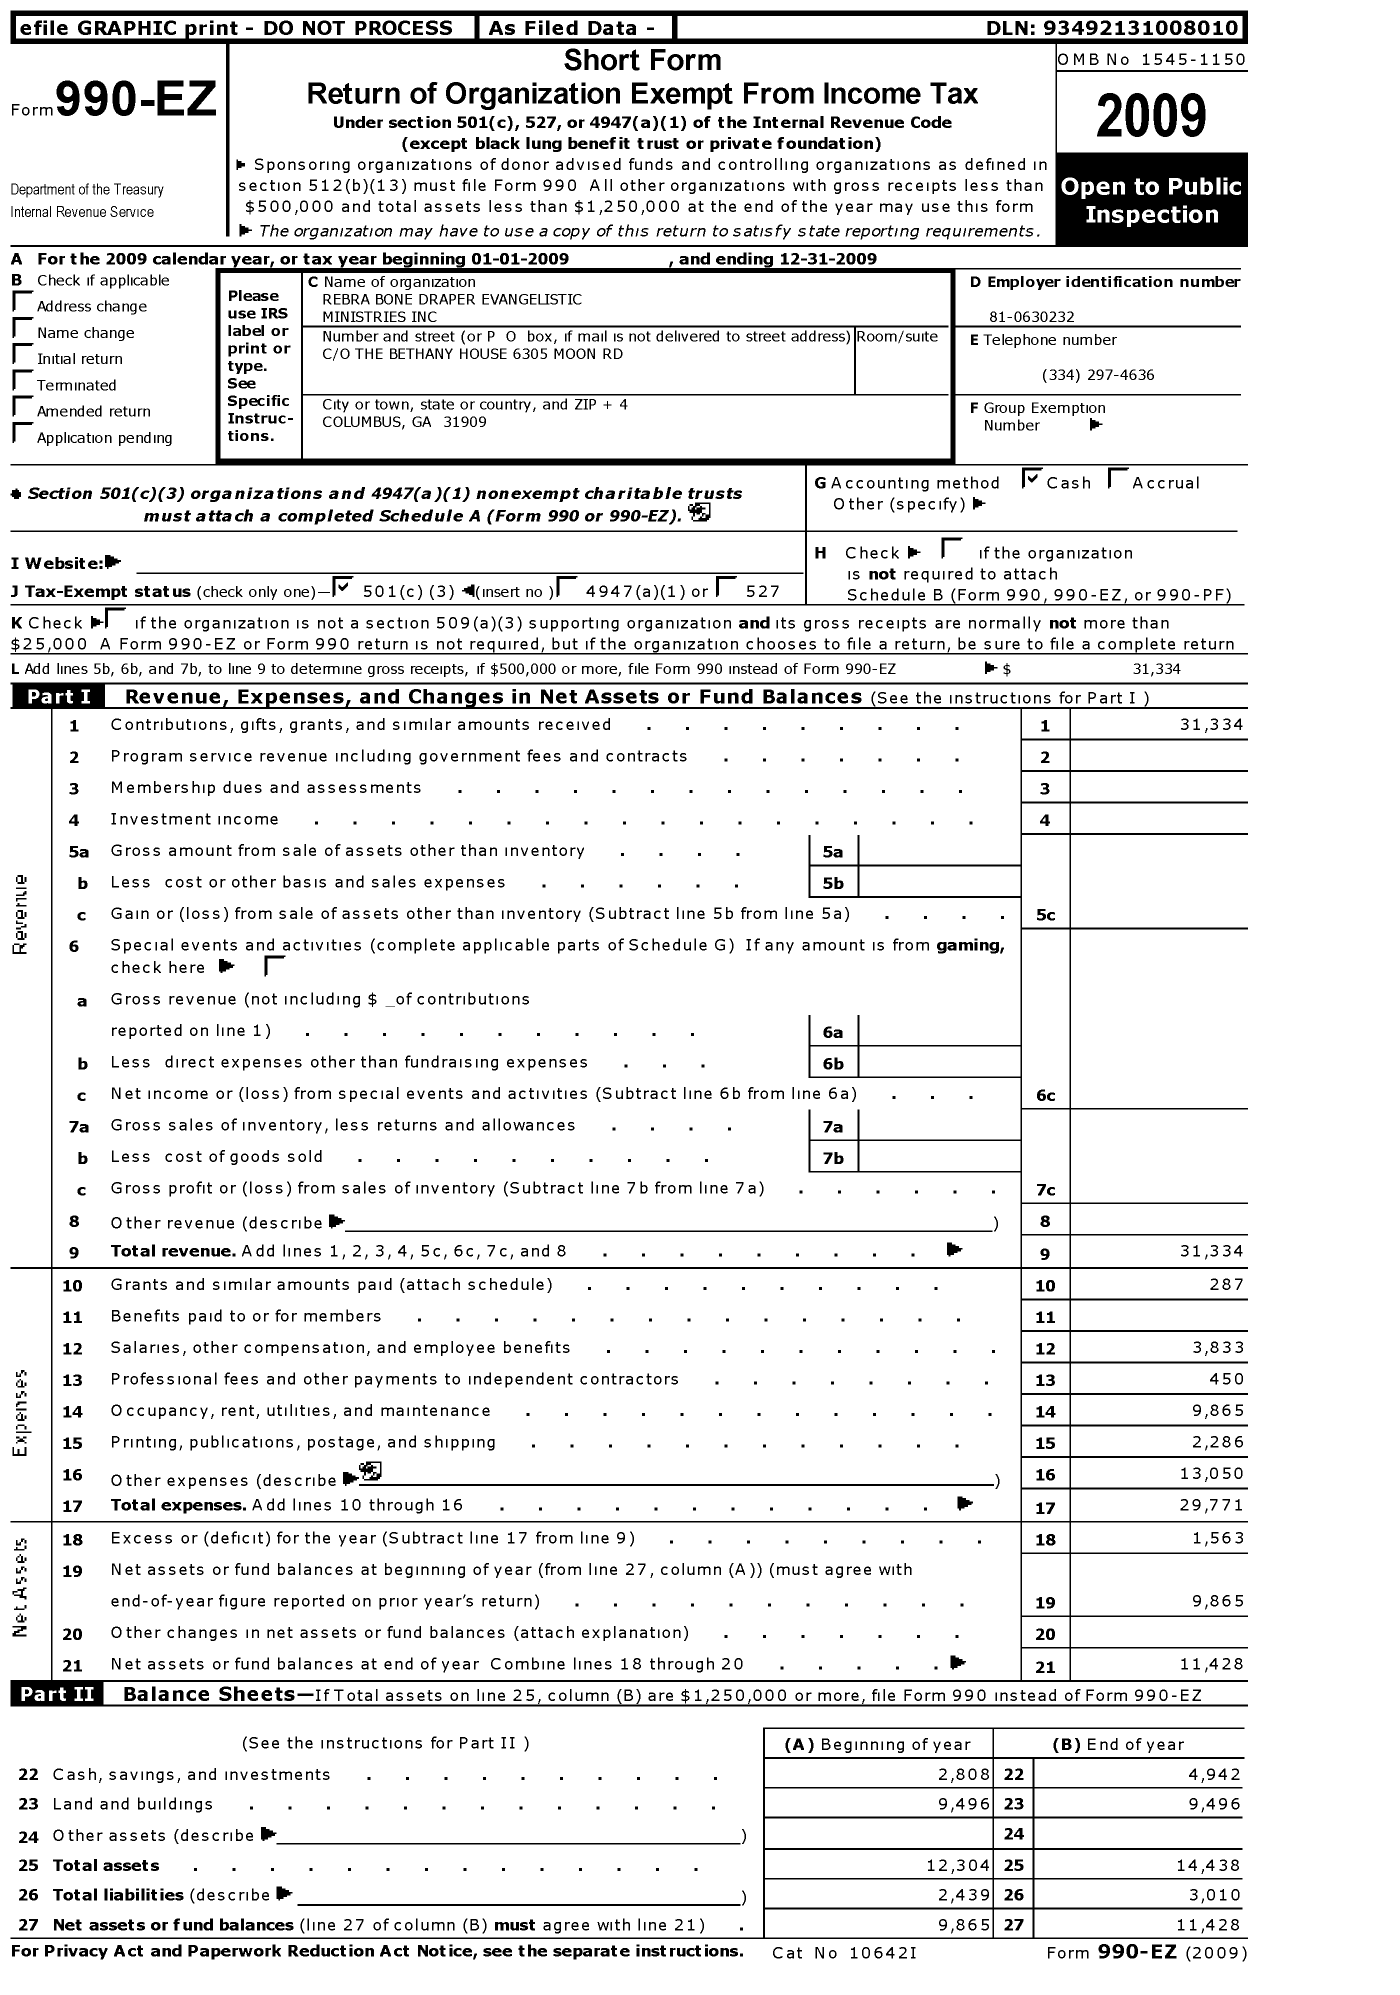 Image of first page of 2009 Form 990EZ for Rebra Bone Draper Evangelistic Mins